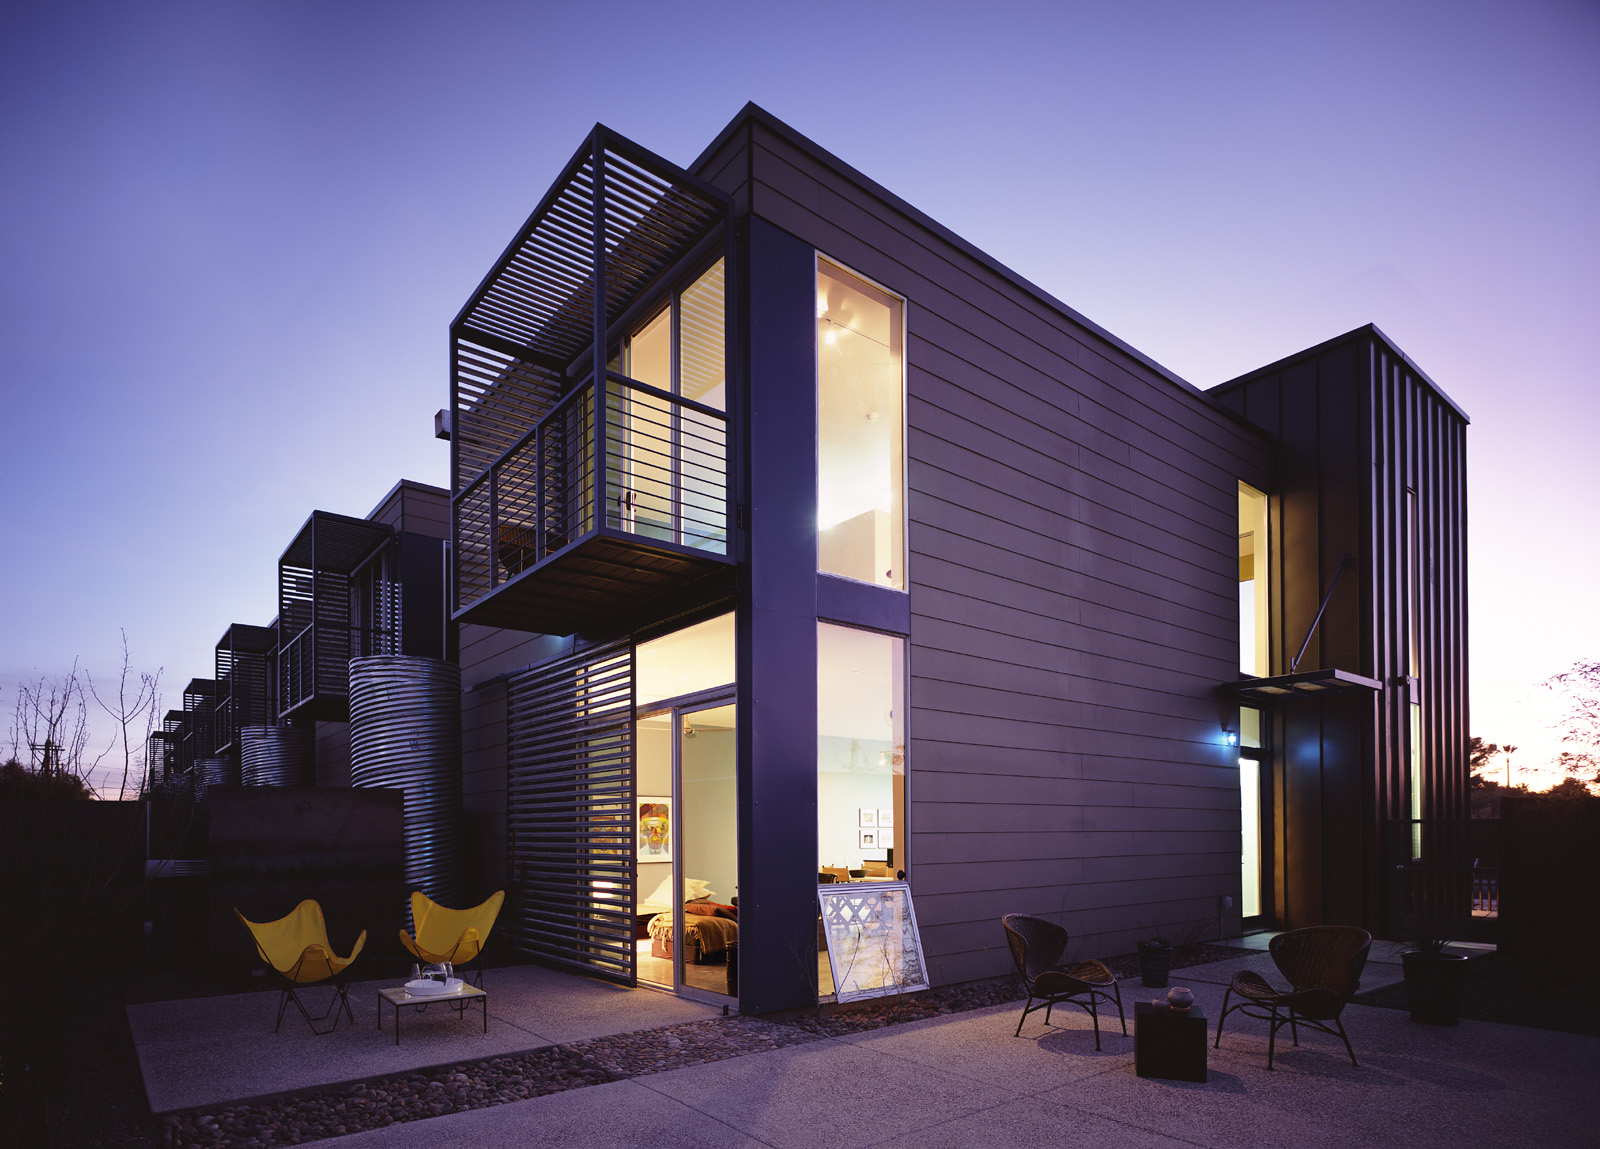 Indigo Modern was designed as an environmentally friendly community of 11 single-family homes, each 1,800 square feet.